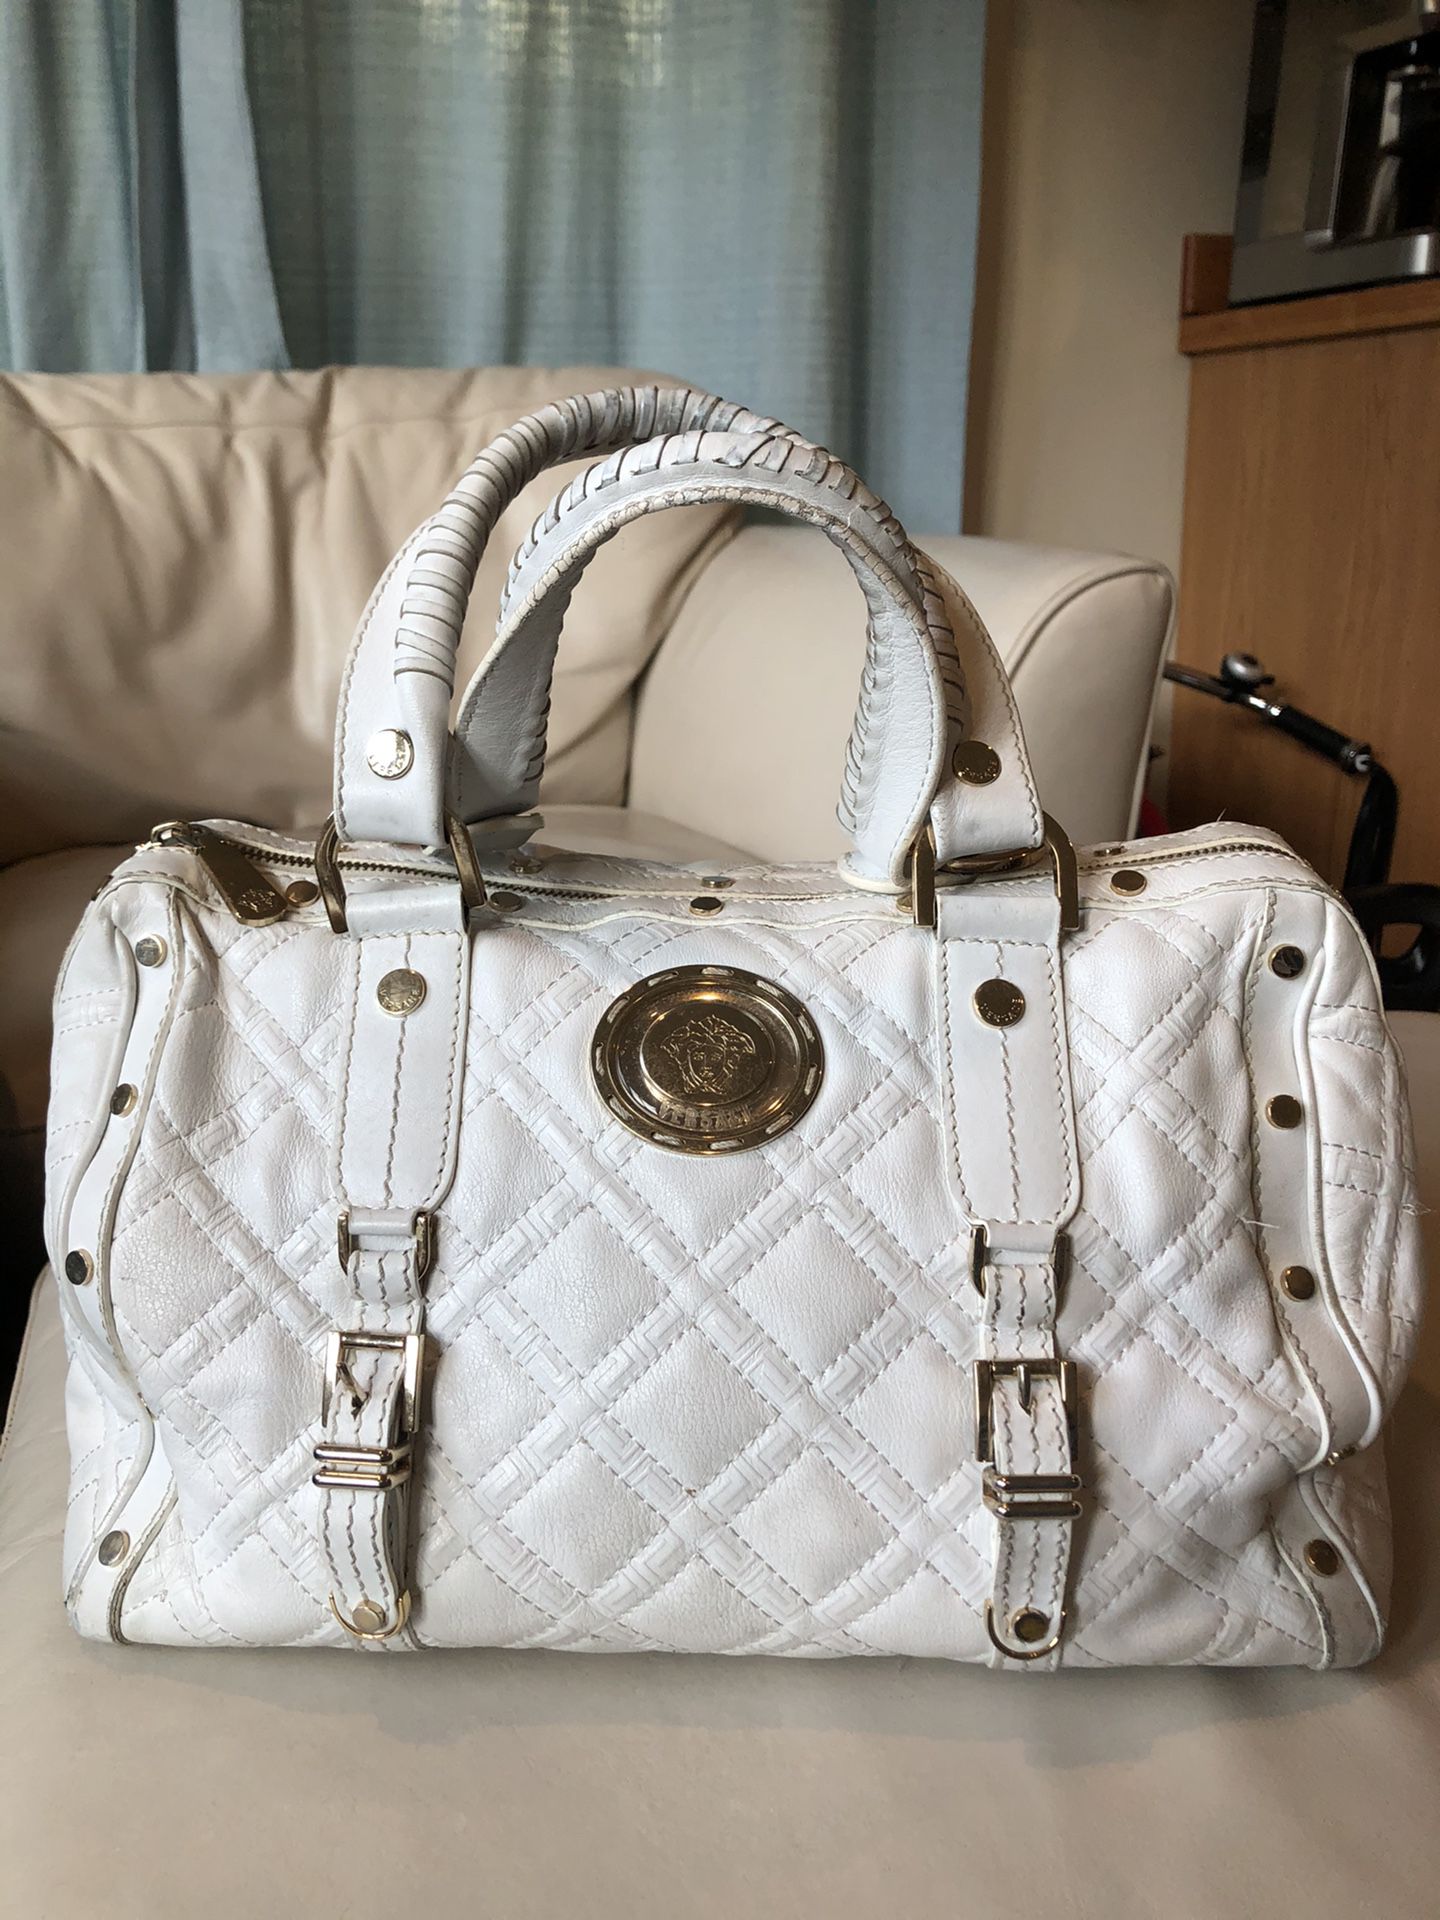 Authentic Versace white purse